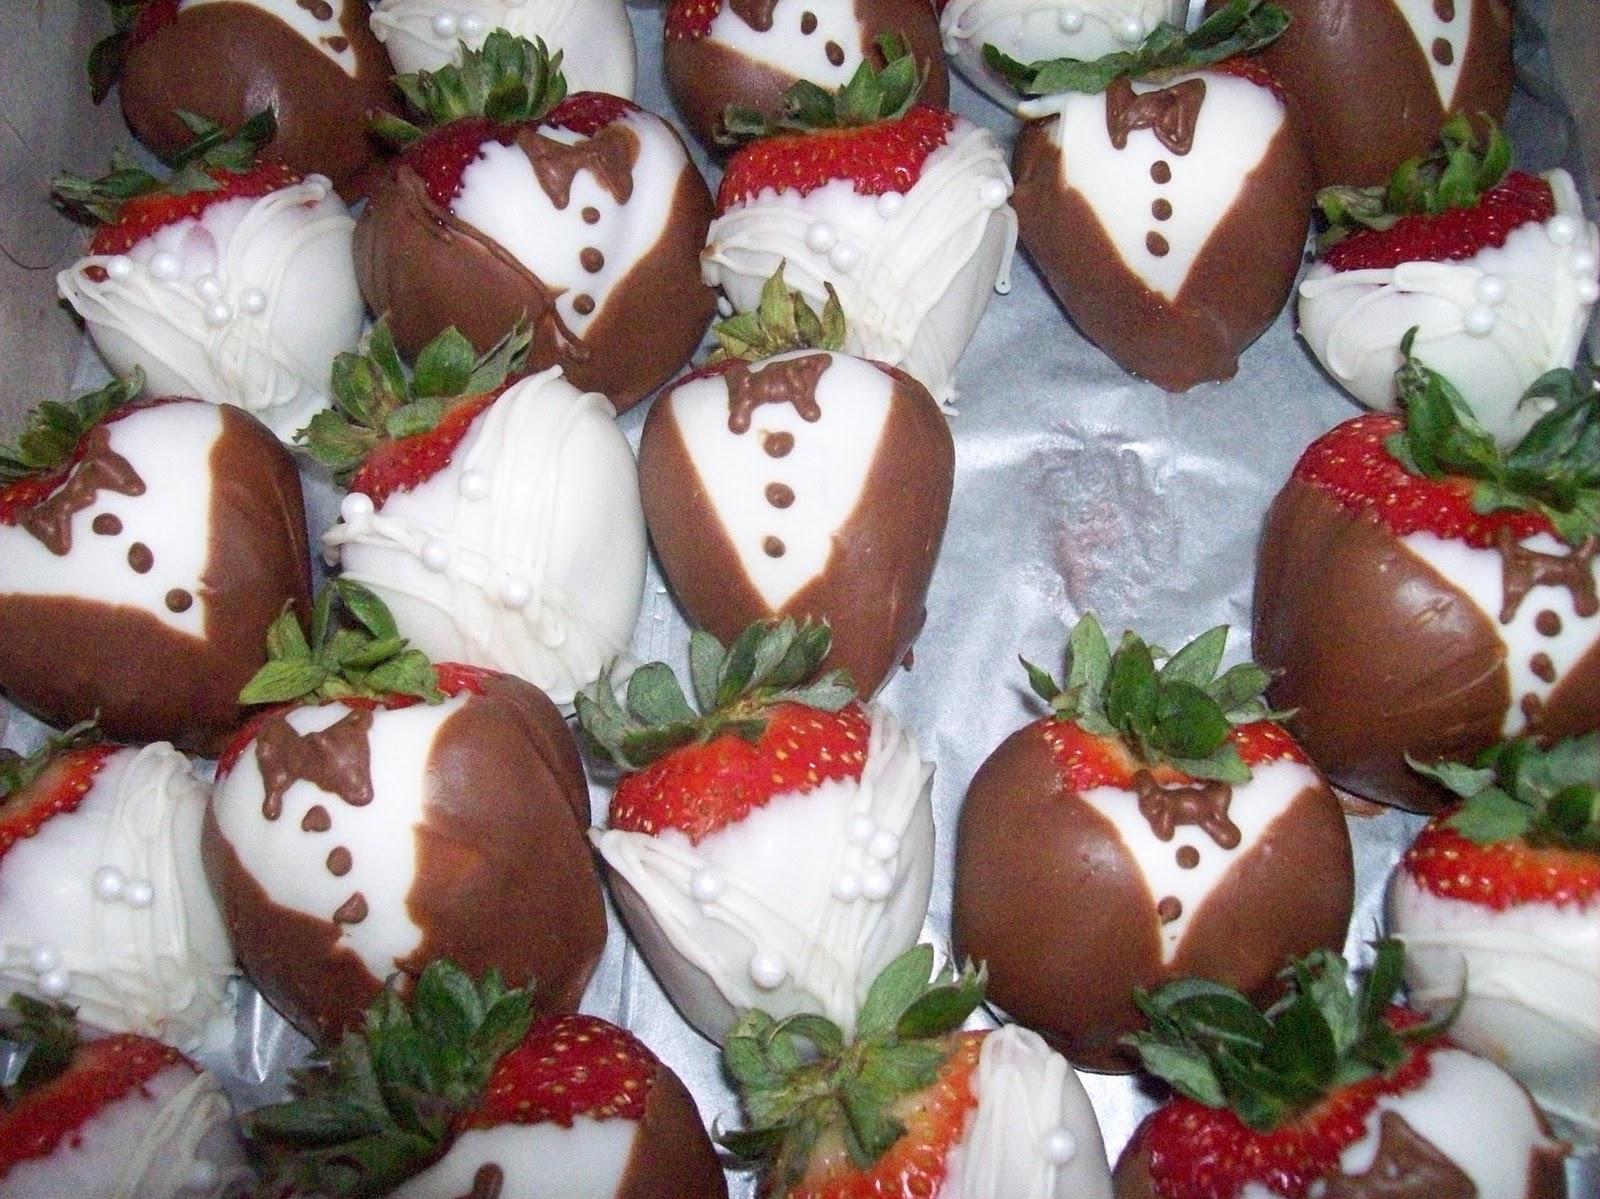 Chocolate covered strawberies